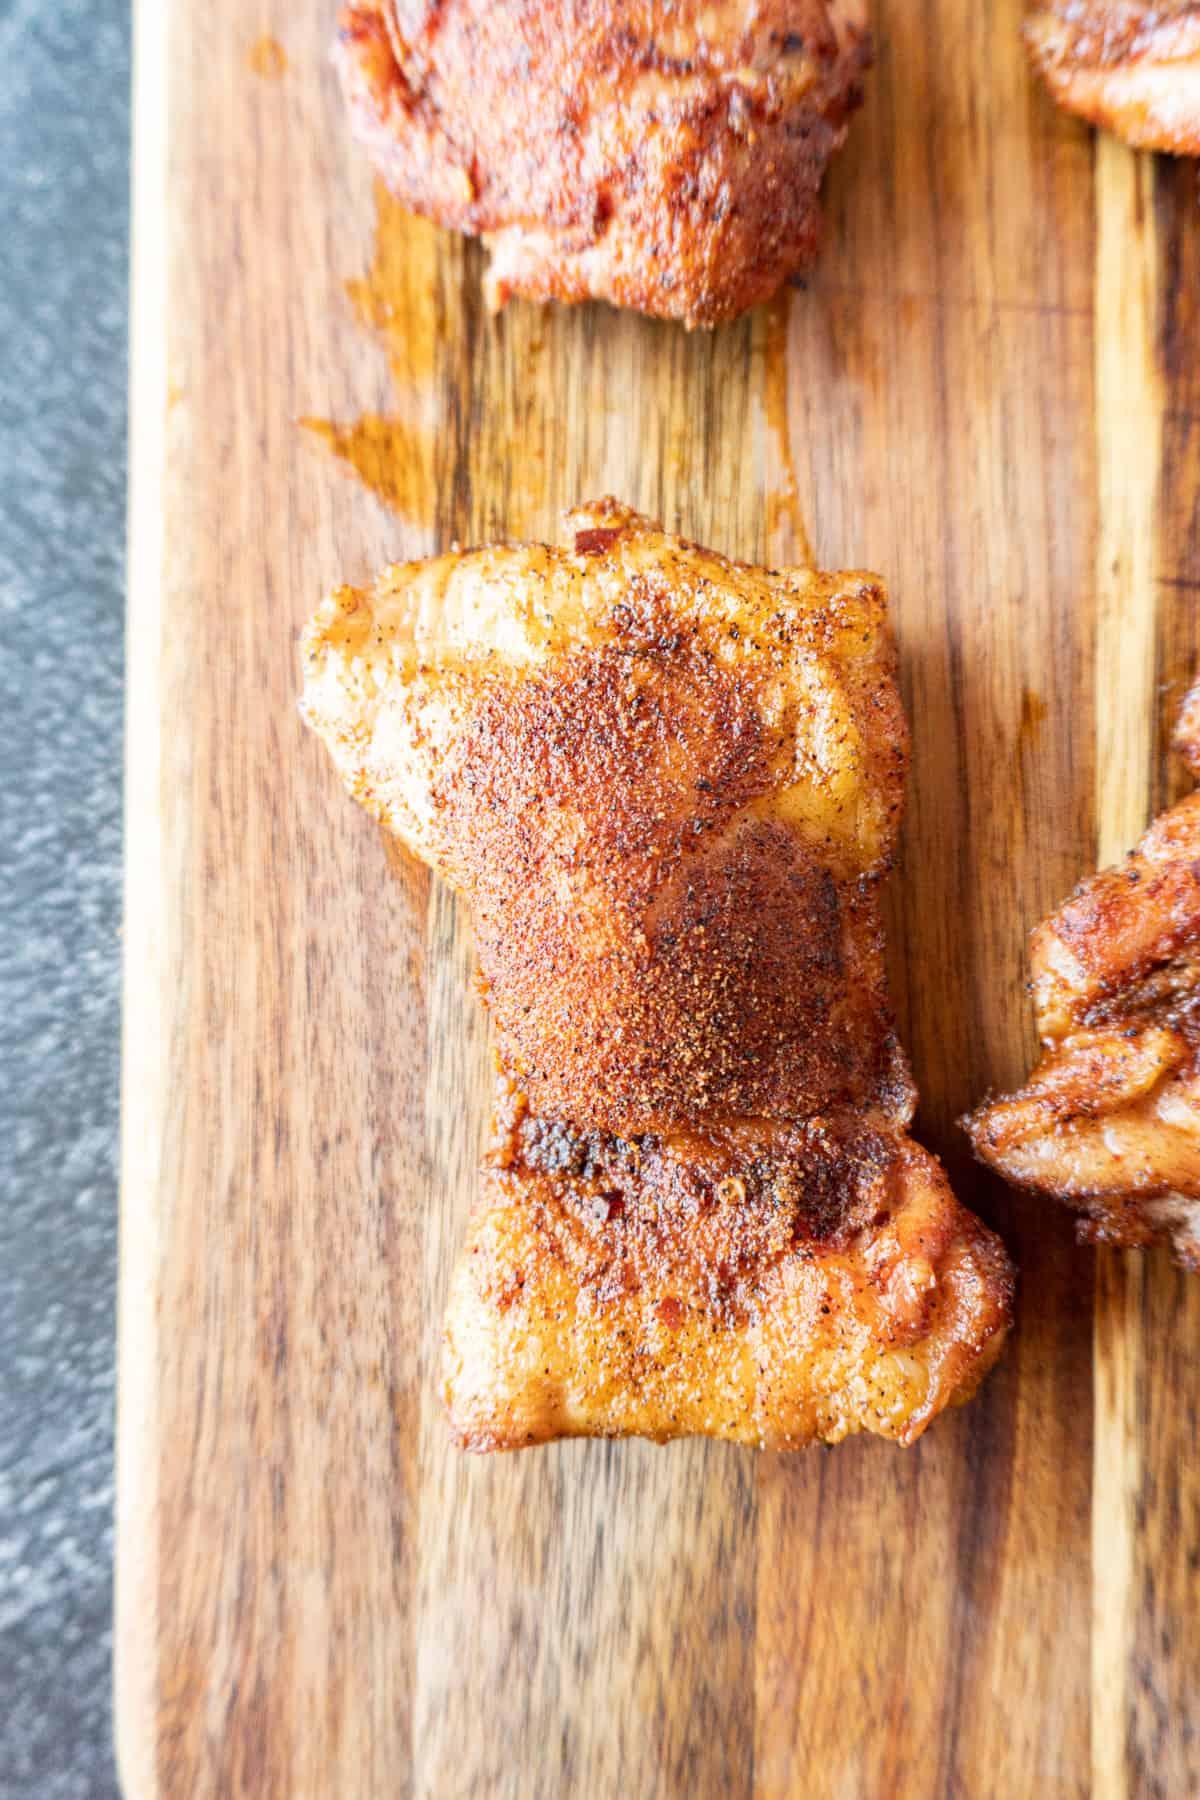 smoked chicken thigh
on cutting board